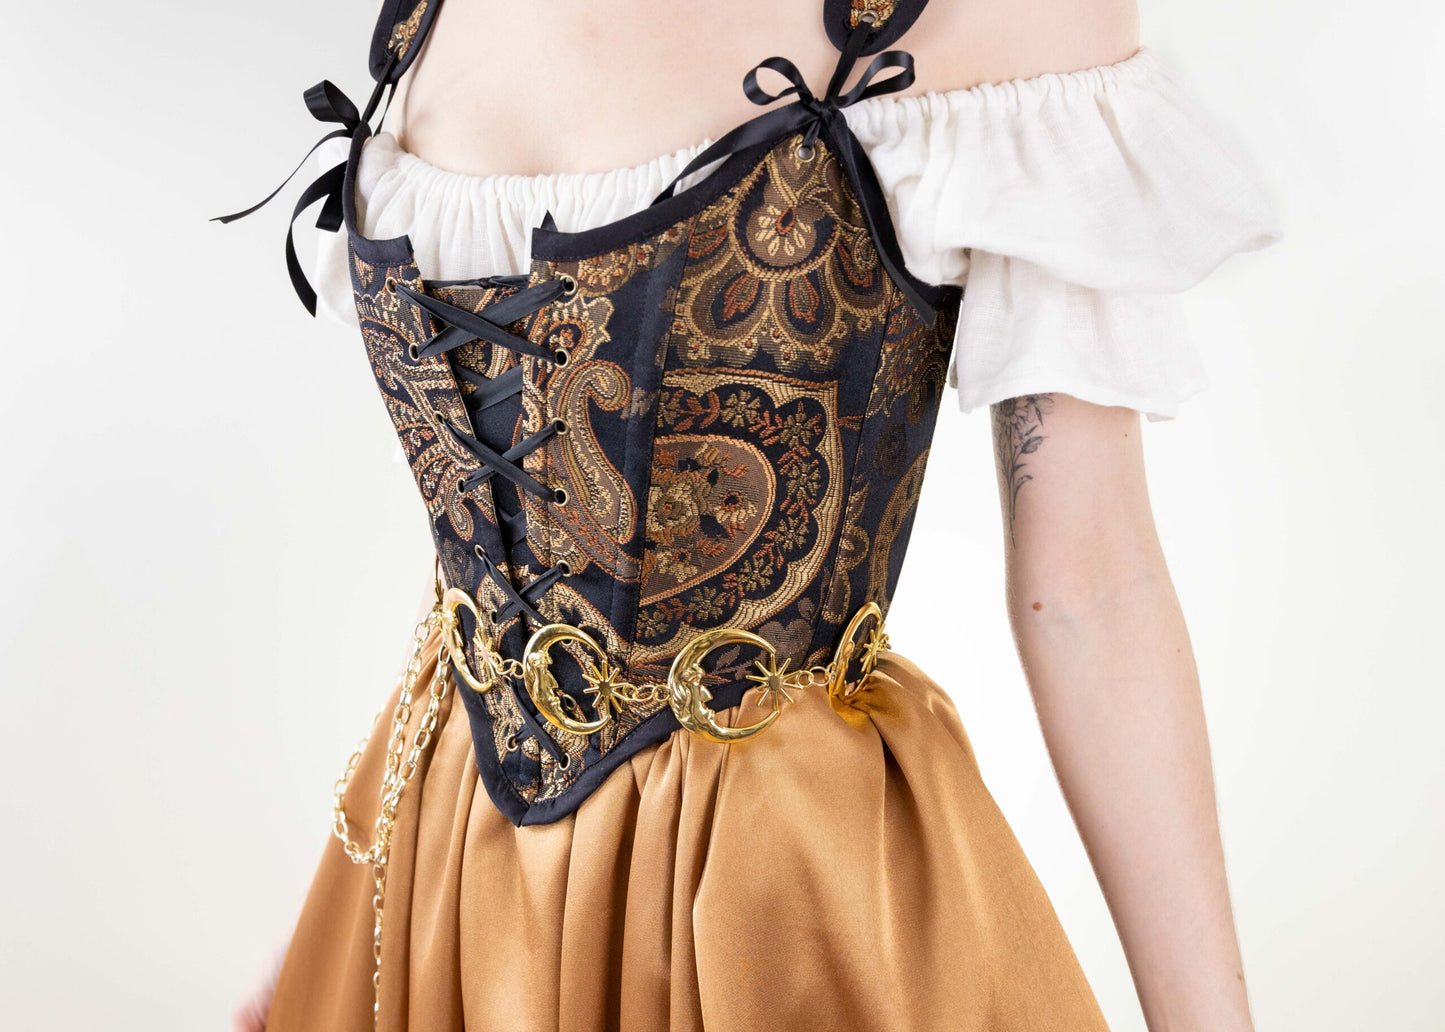  Century Star Women Renaissance Corset Pirate Vest